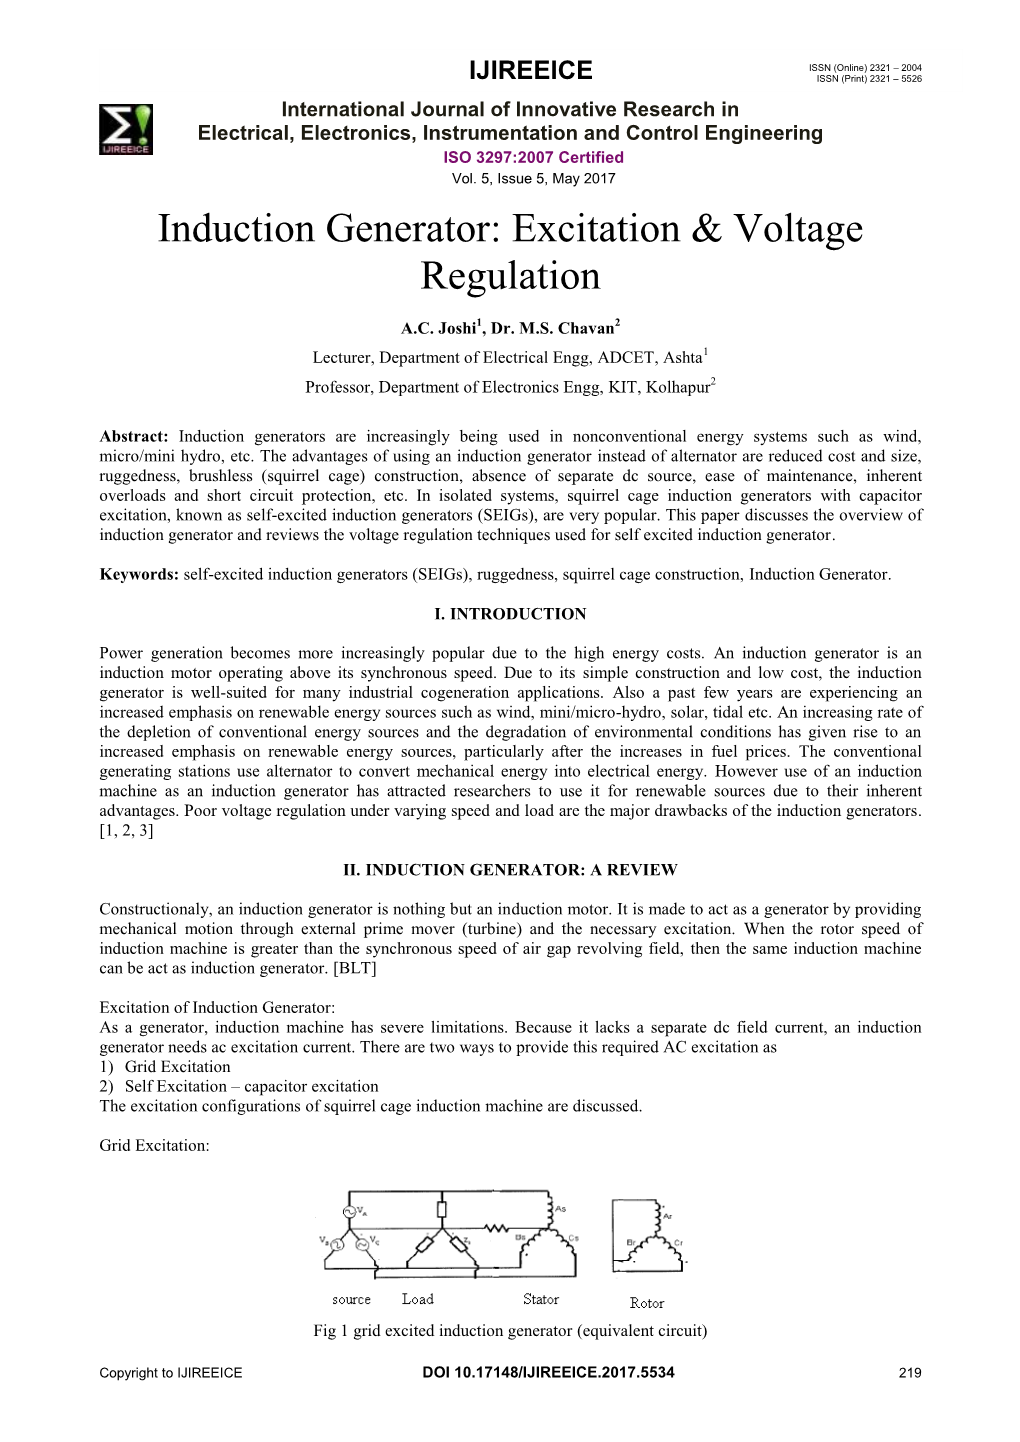 Induction Generator: Excitation & Voltage Regulation